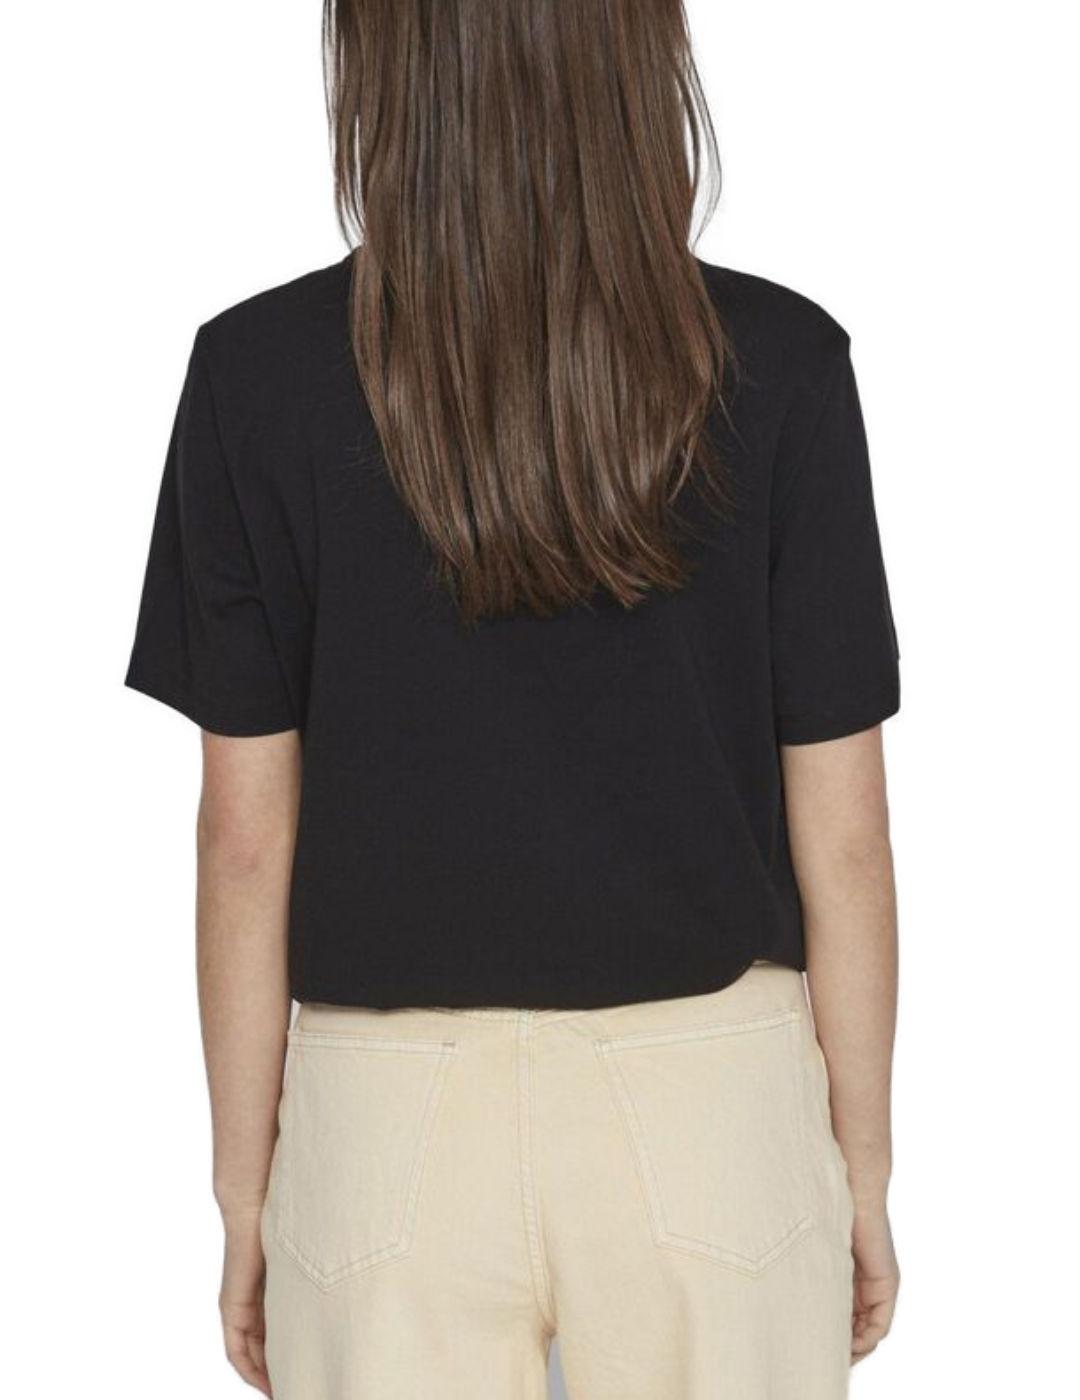 Camiseta Vila Sybil negro holgada manga corta para mujer